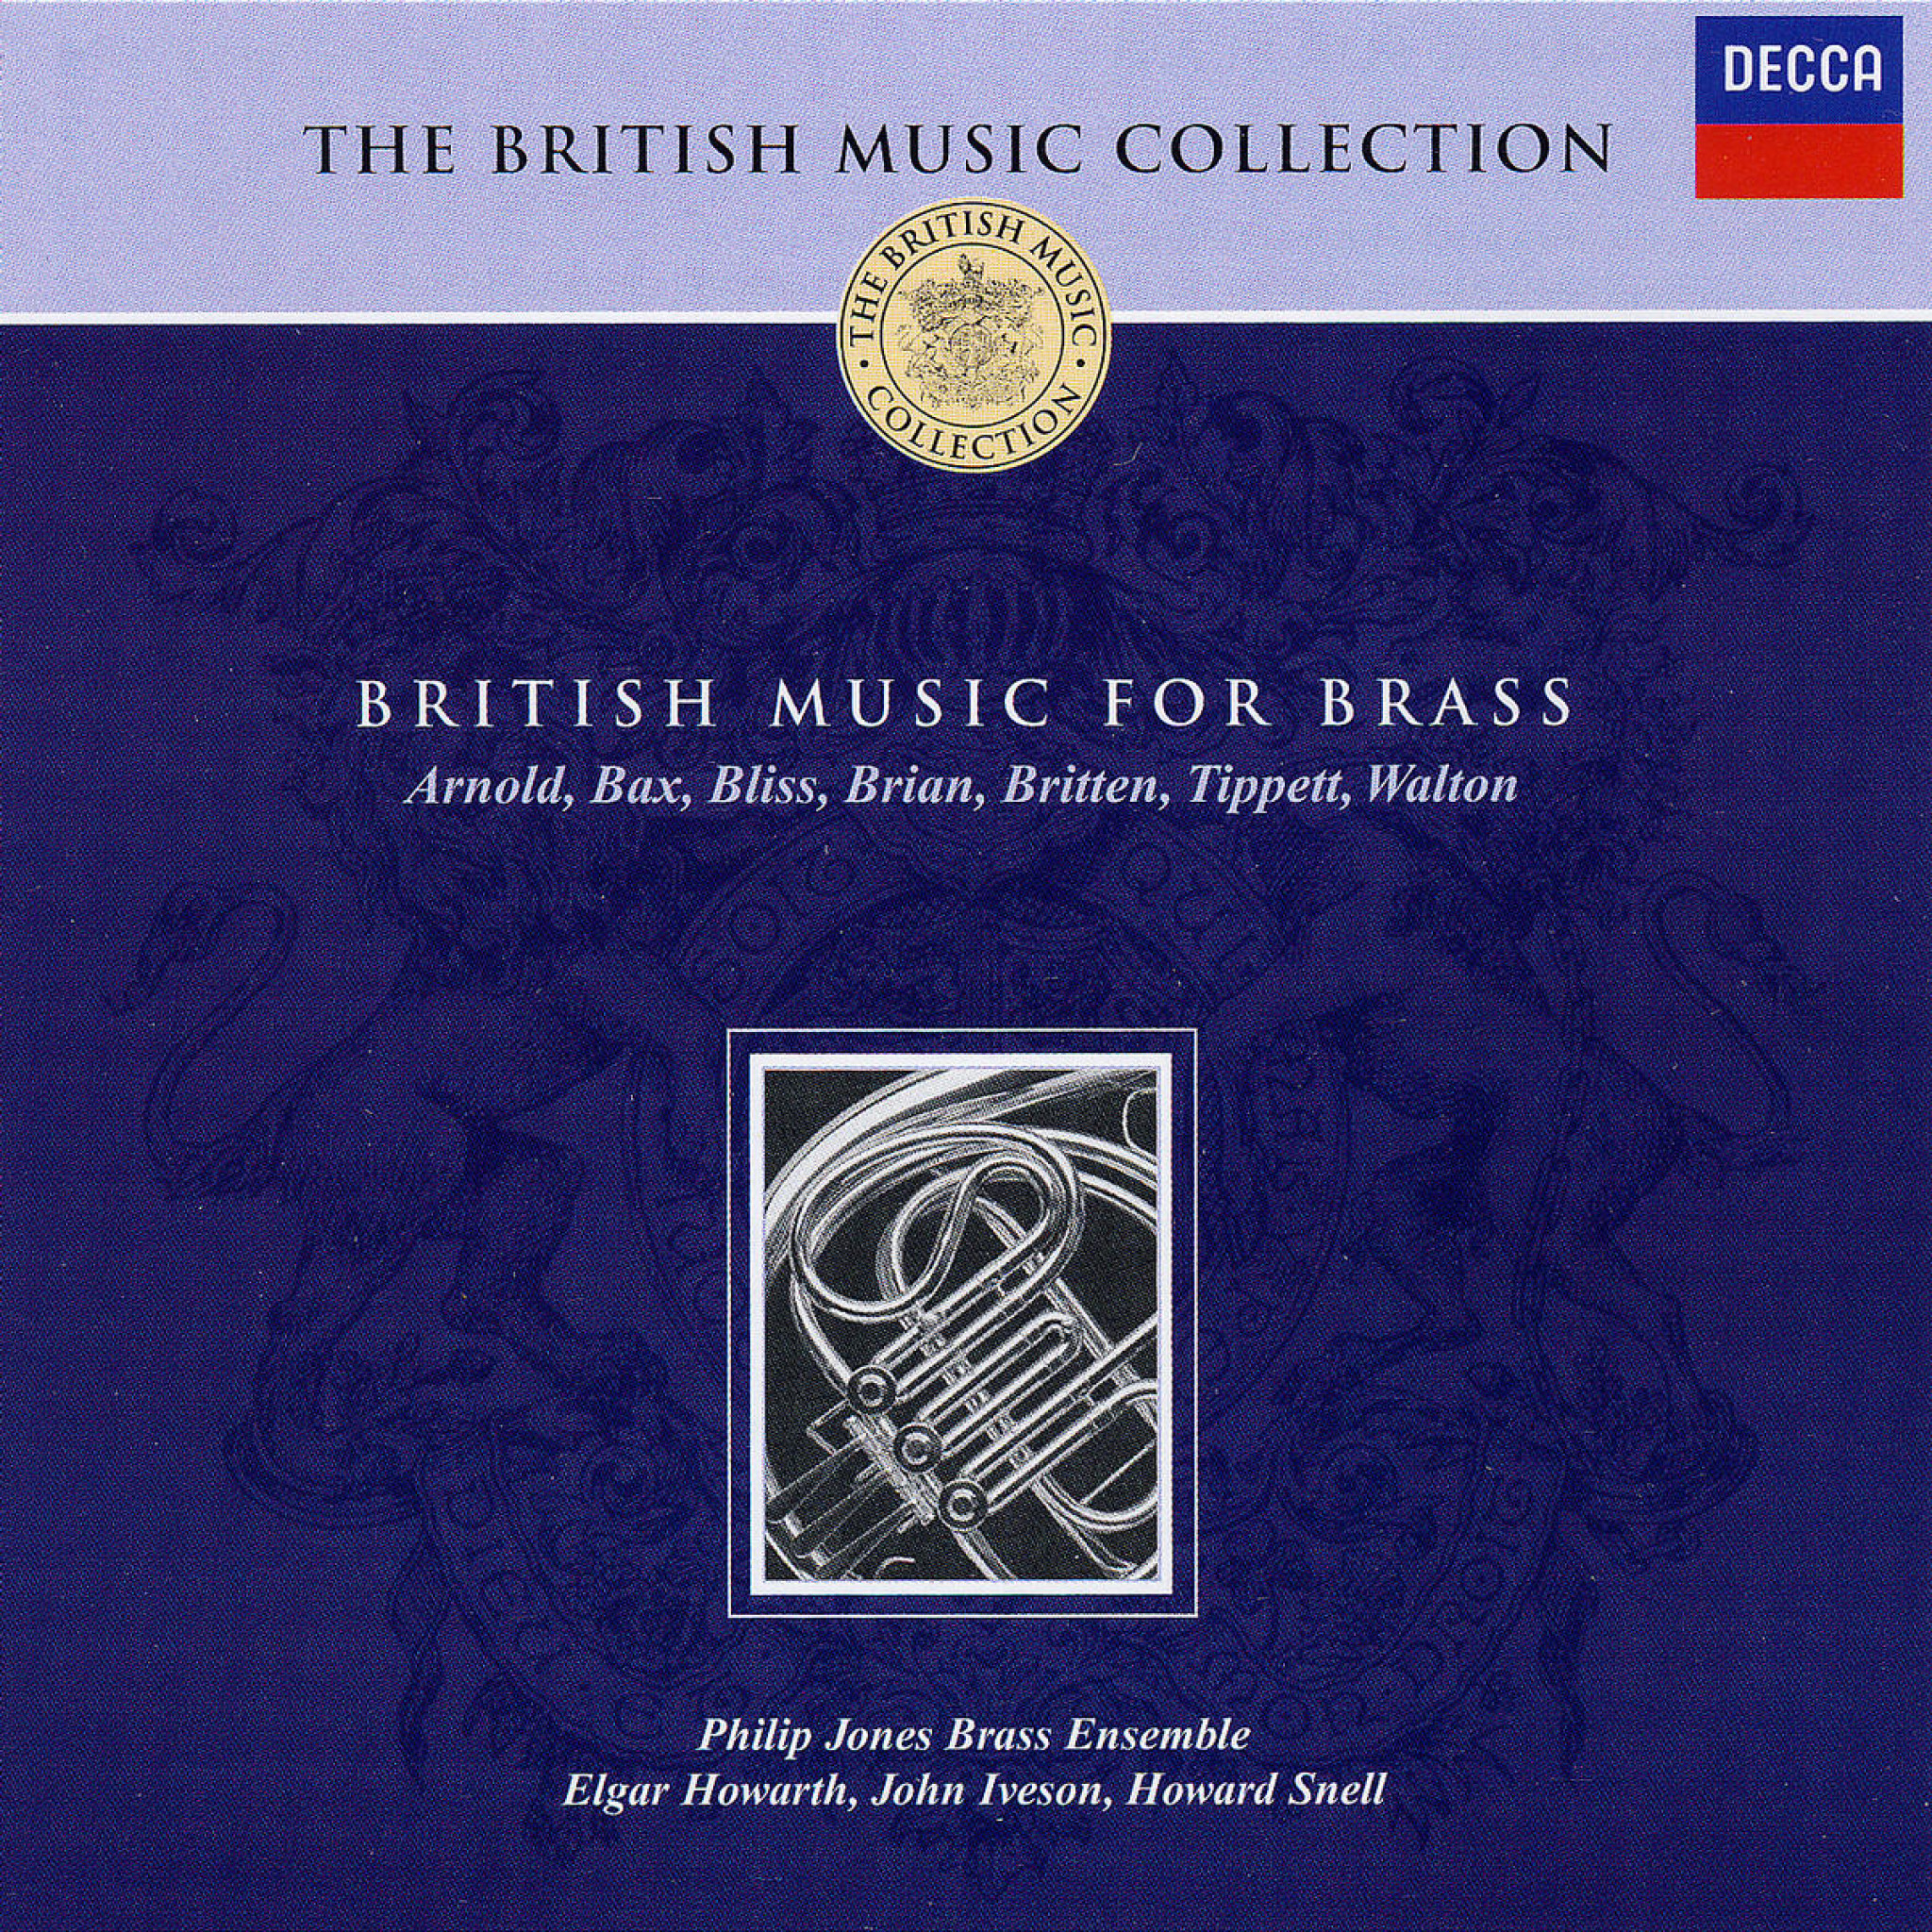 BRITISH MUSIC FOR BRASS 